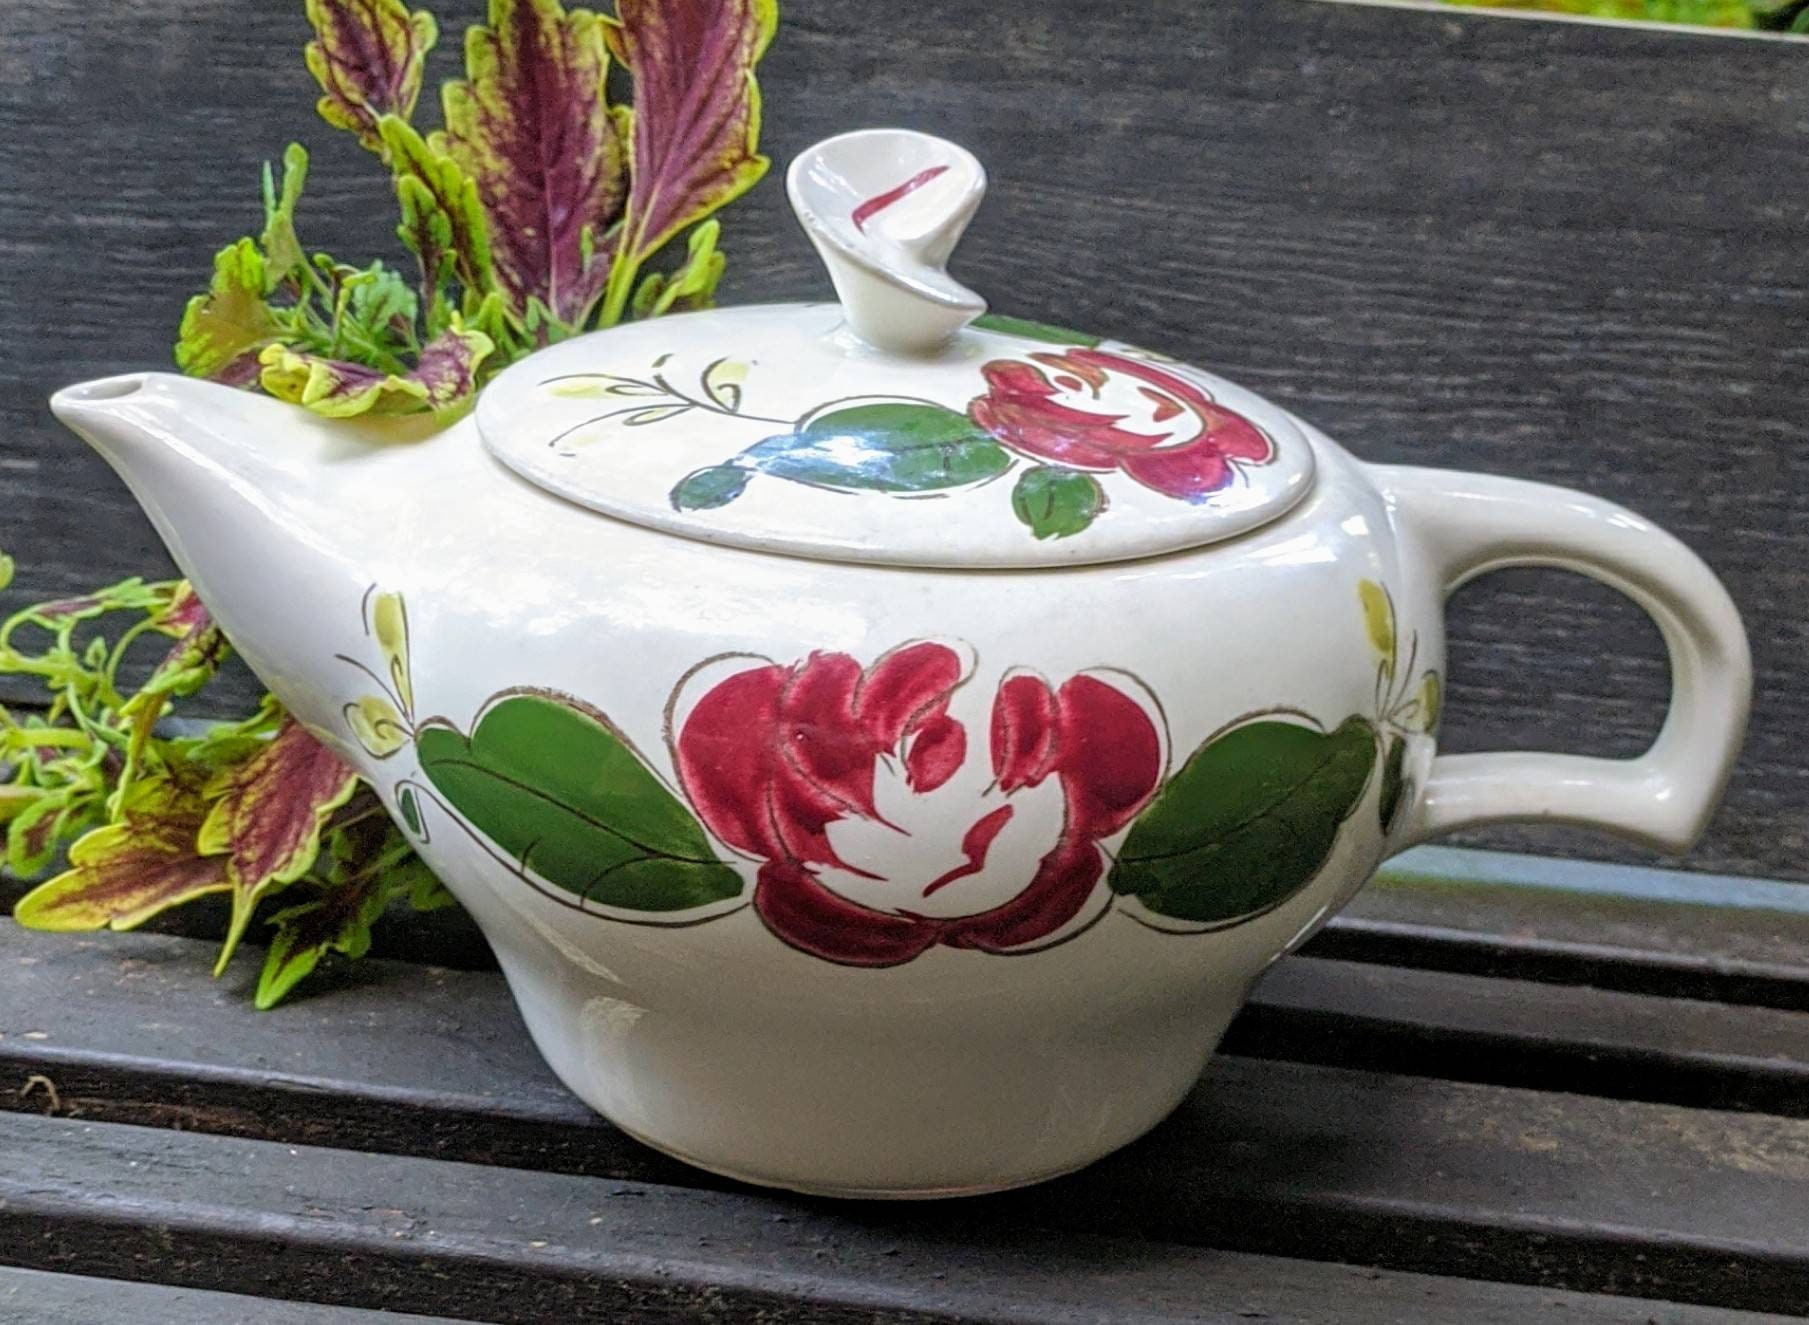 Glass Teapot, Zpose Tea Pot, Teapots, 40oz/1200ml Tea Pots with Scale Line, Tea Pot with Infuser, Borosilicate Glass Teapot for Stovetop Safe, Tea Pot